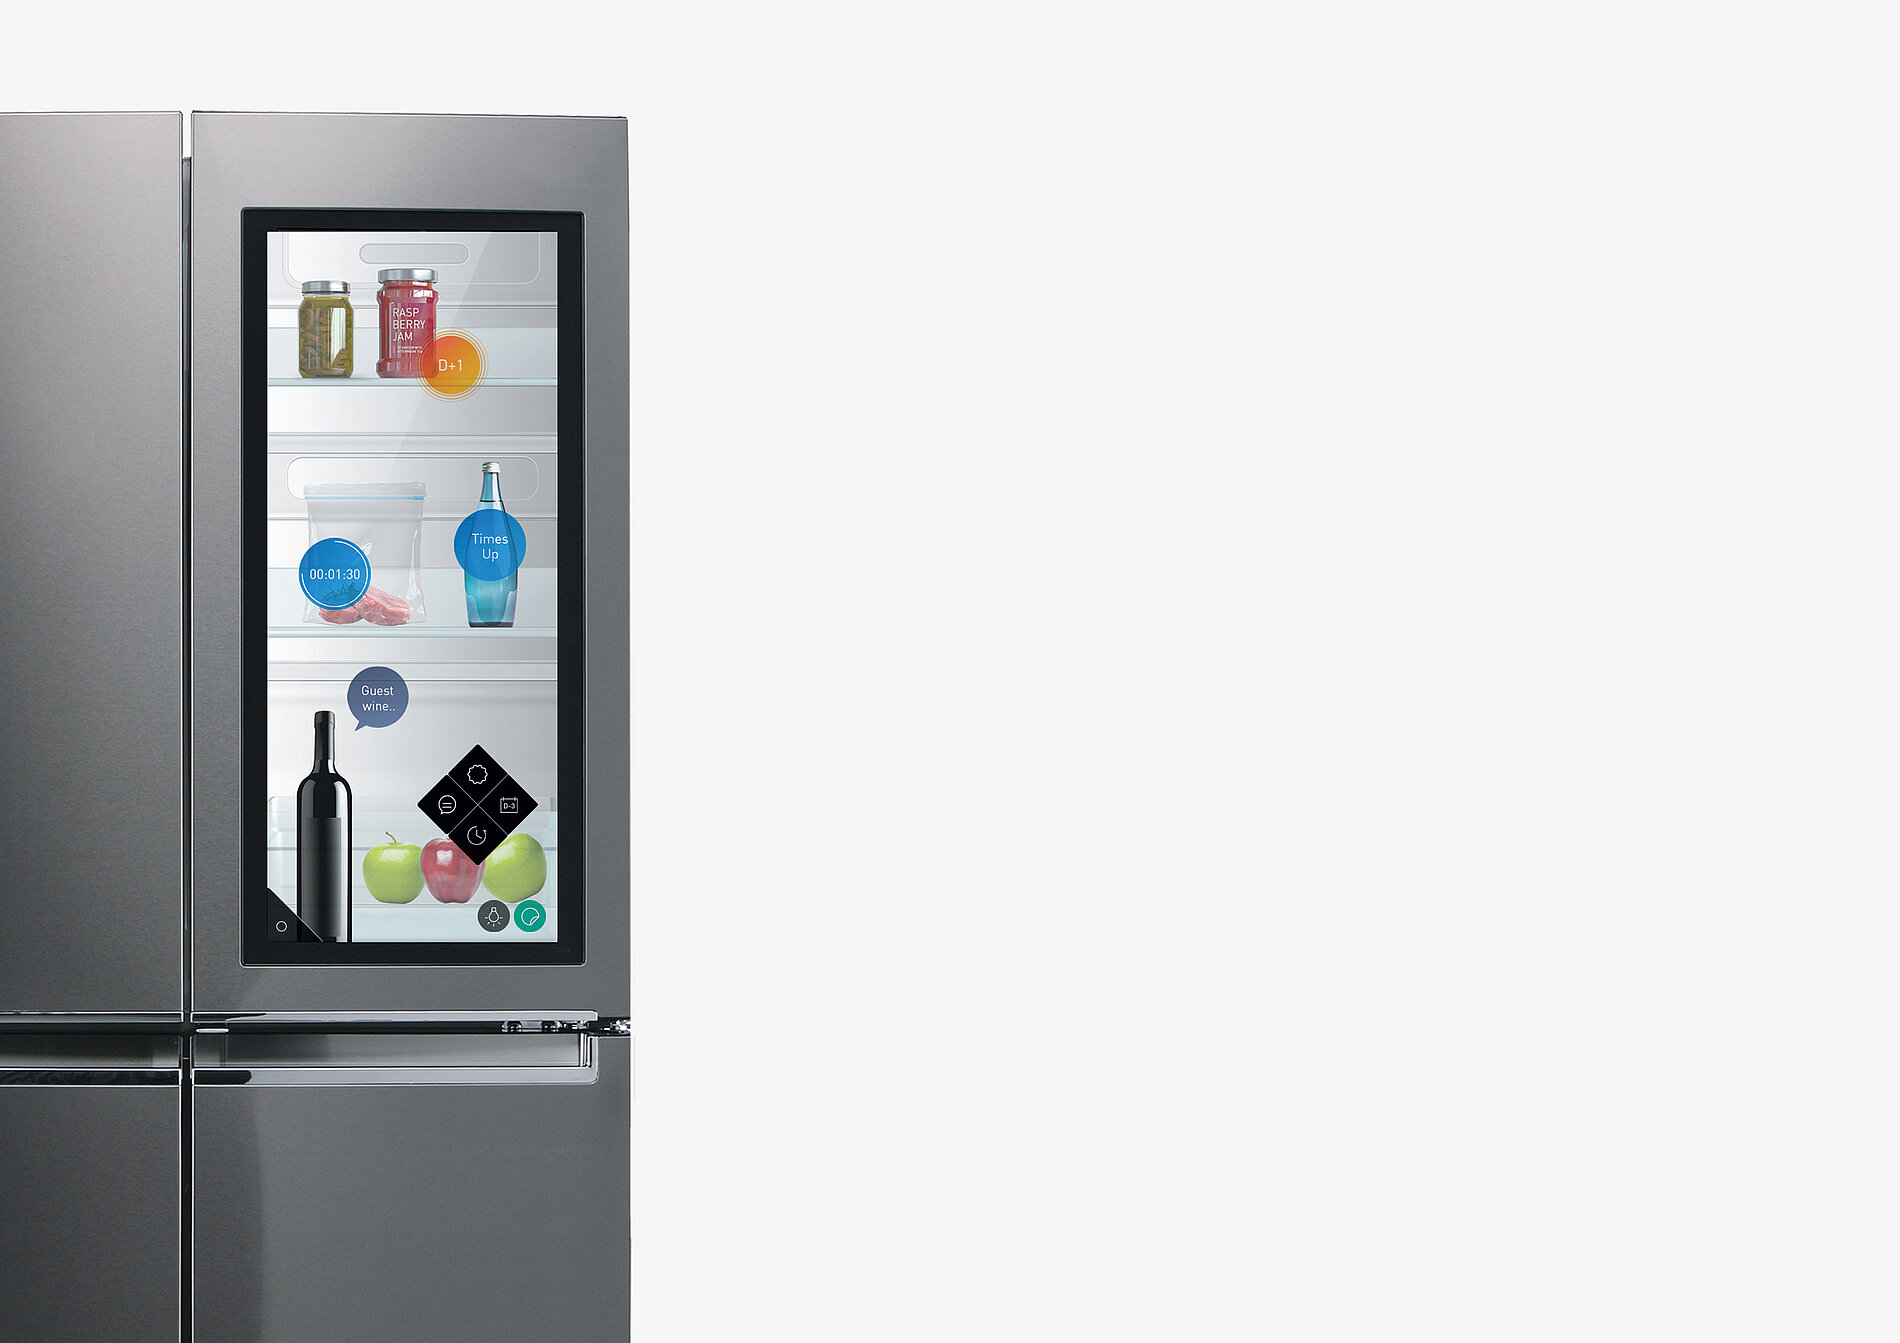 Red Dot Design Award: LG Smart InstaView Refrigerator